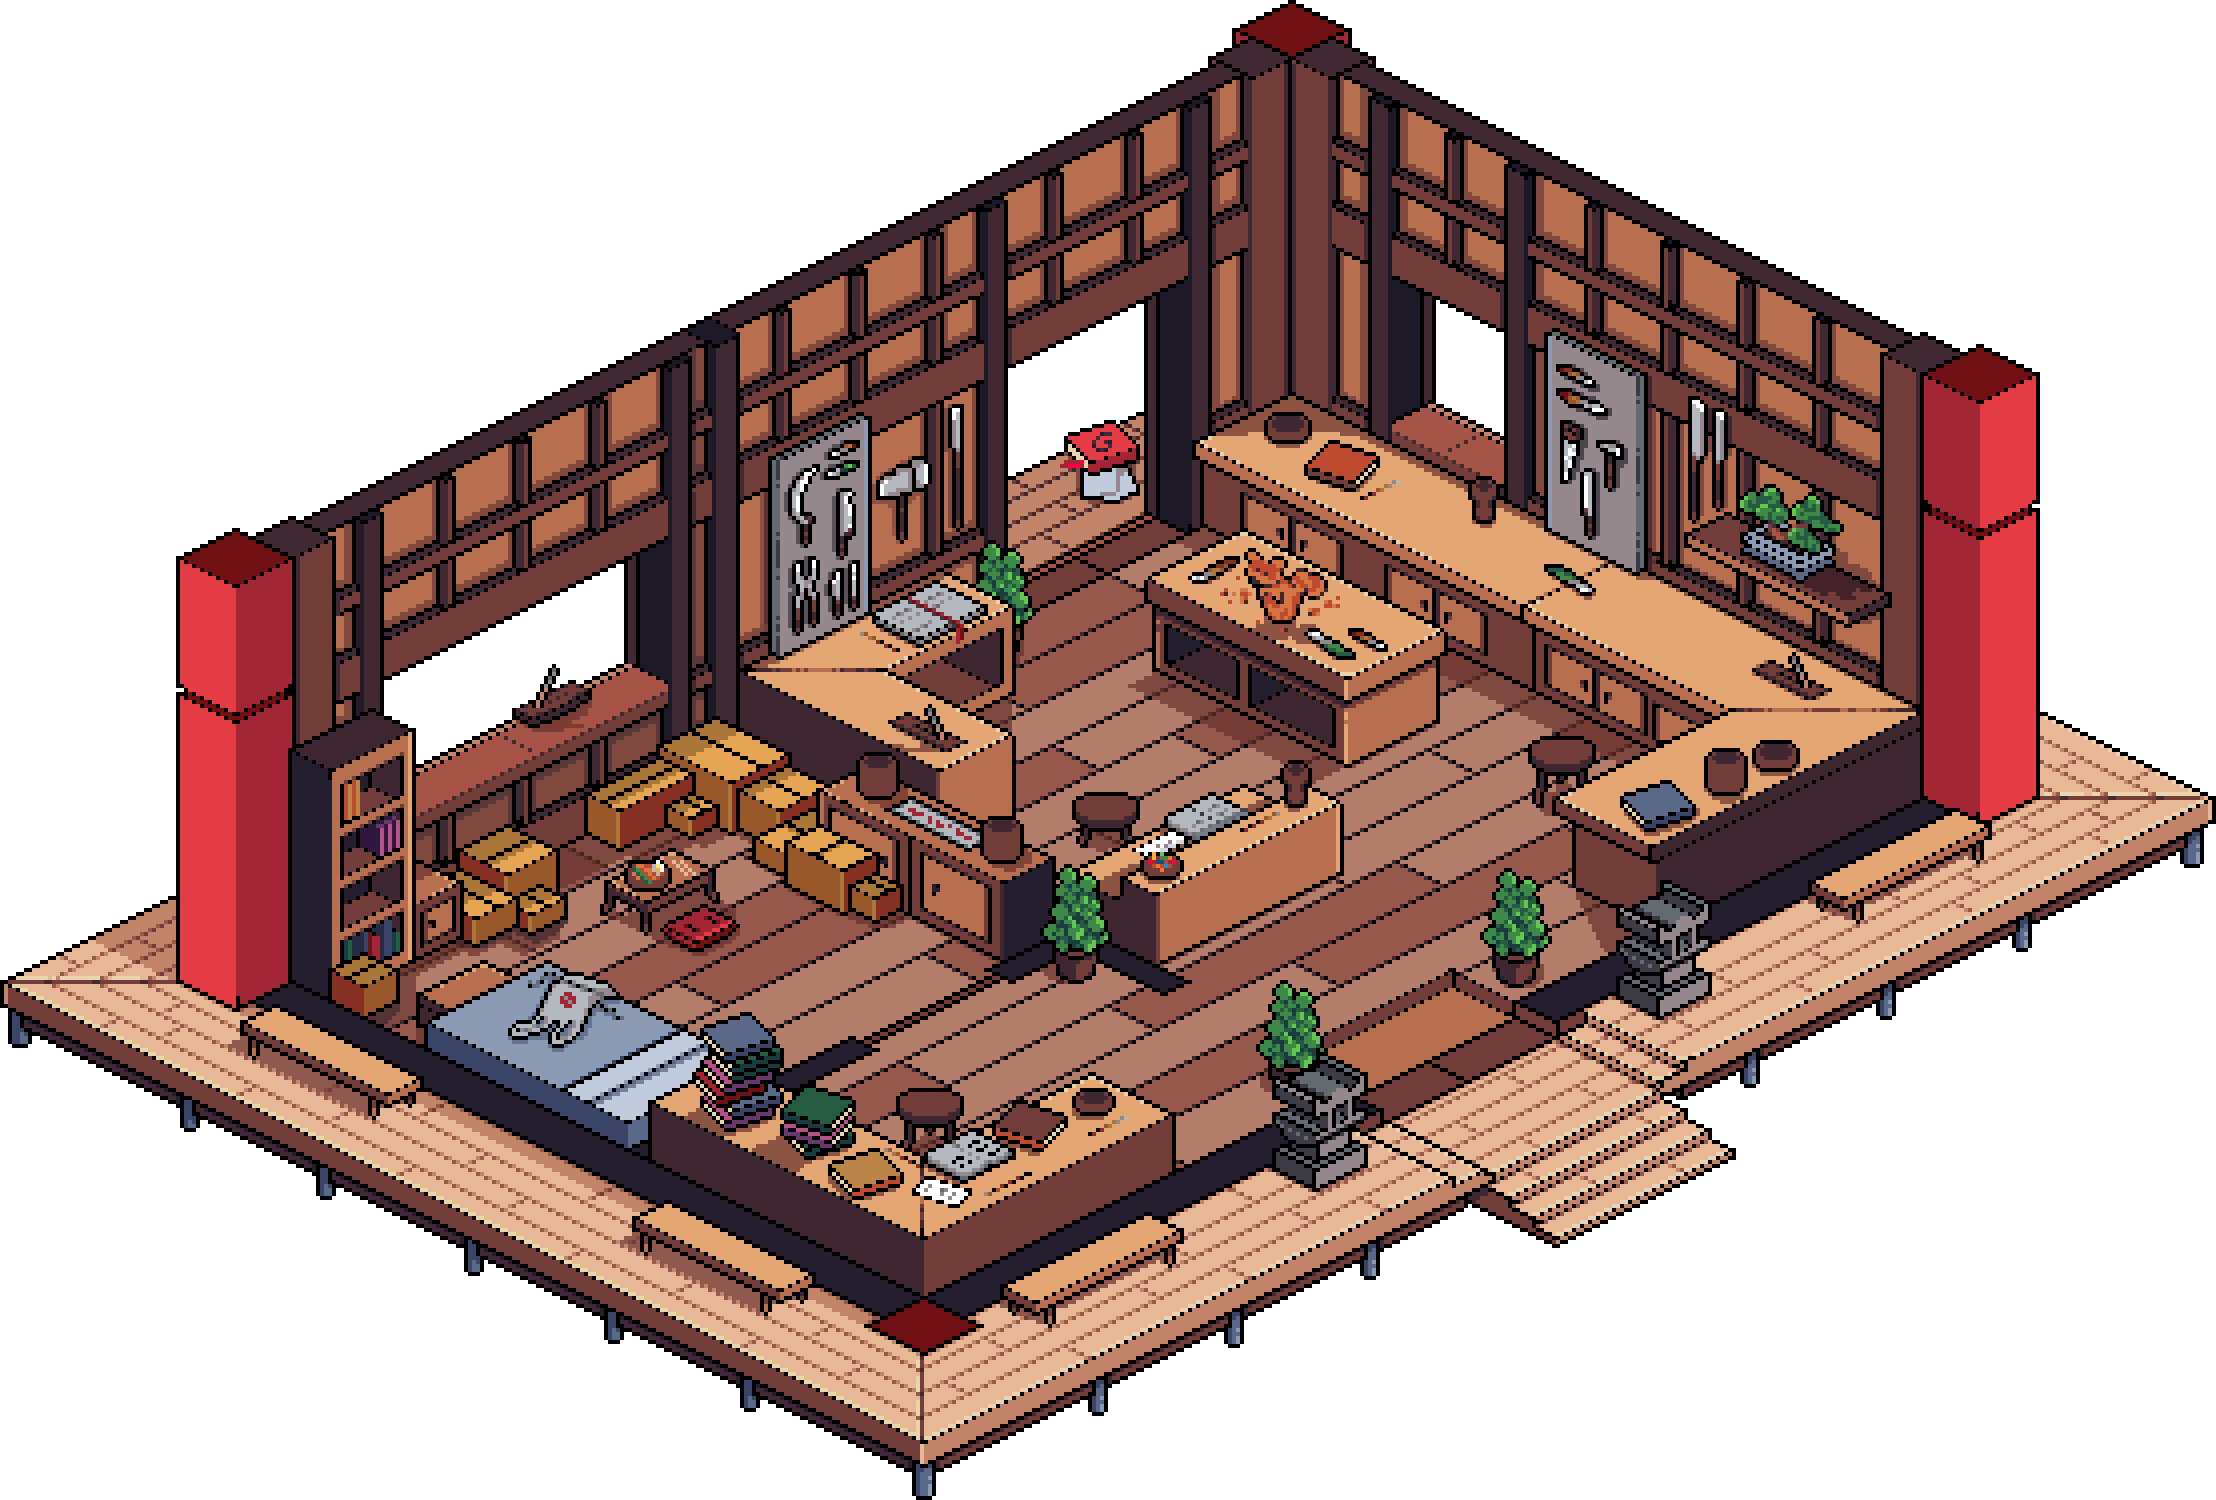 The Pixel Shop